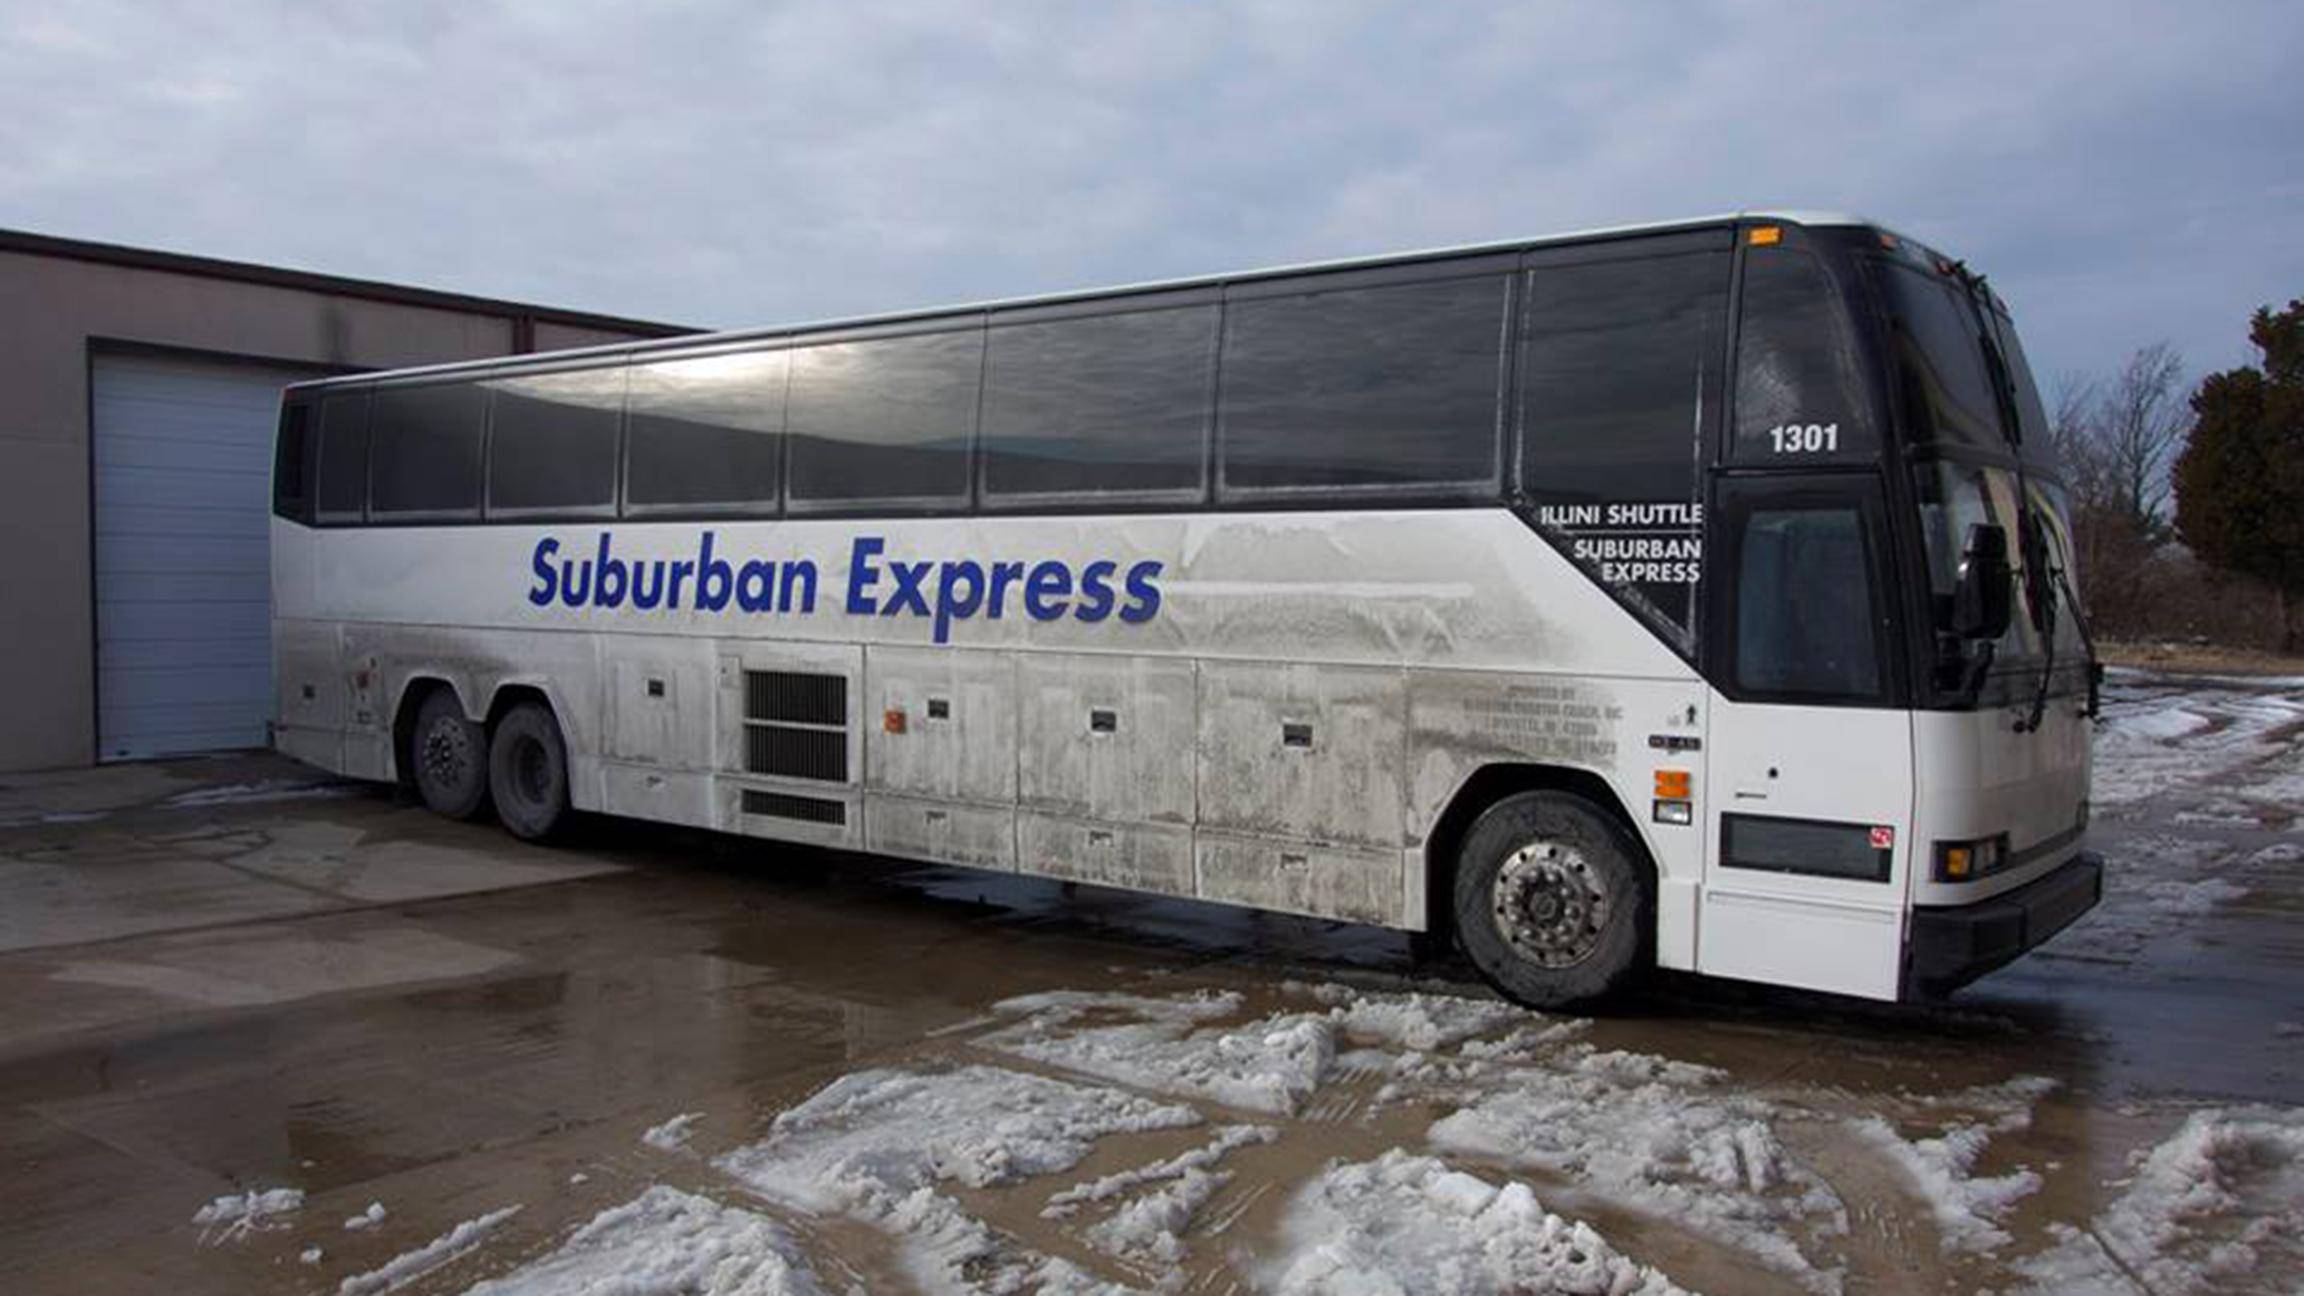 Suburban Express takes the fast lane to national notoriety